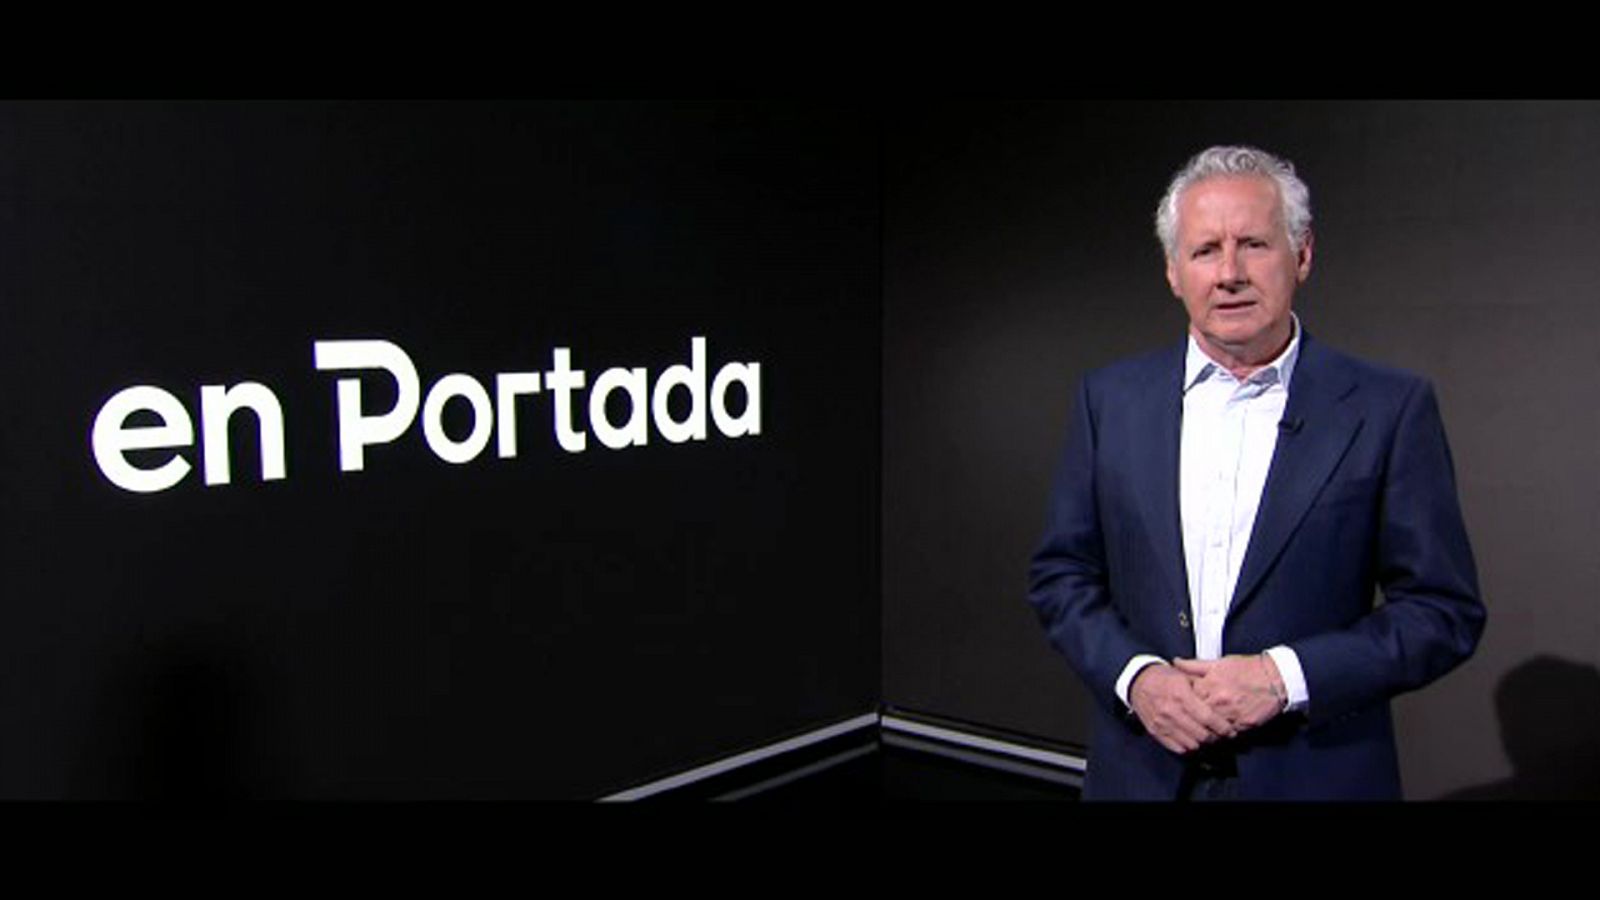 'En Portada' inicia nueva etapa en La 1 con Lorenzo Milá